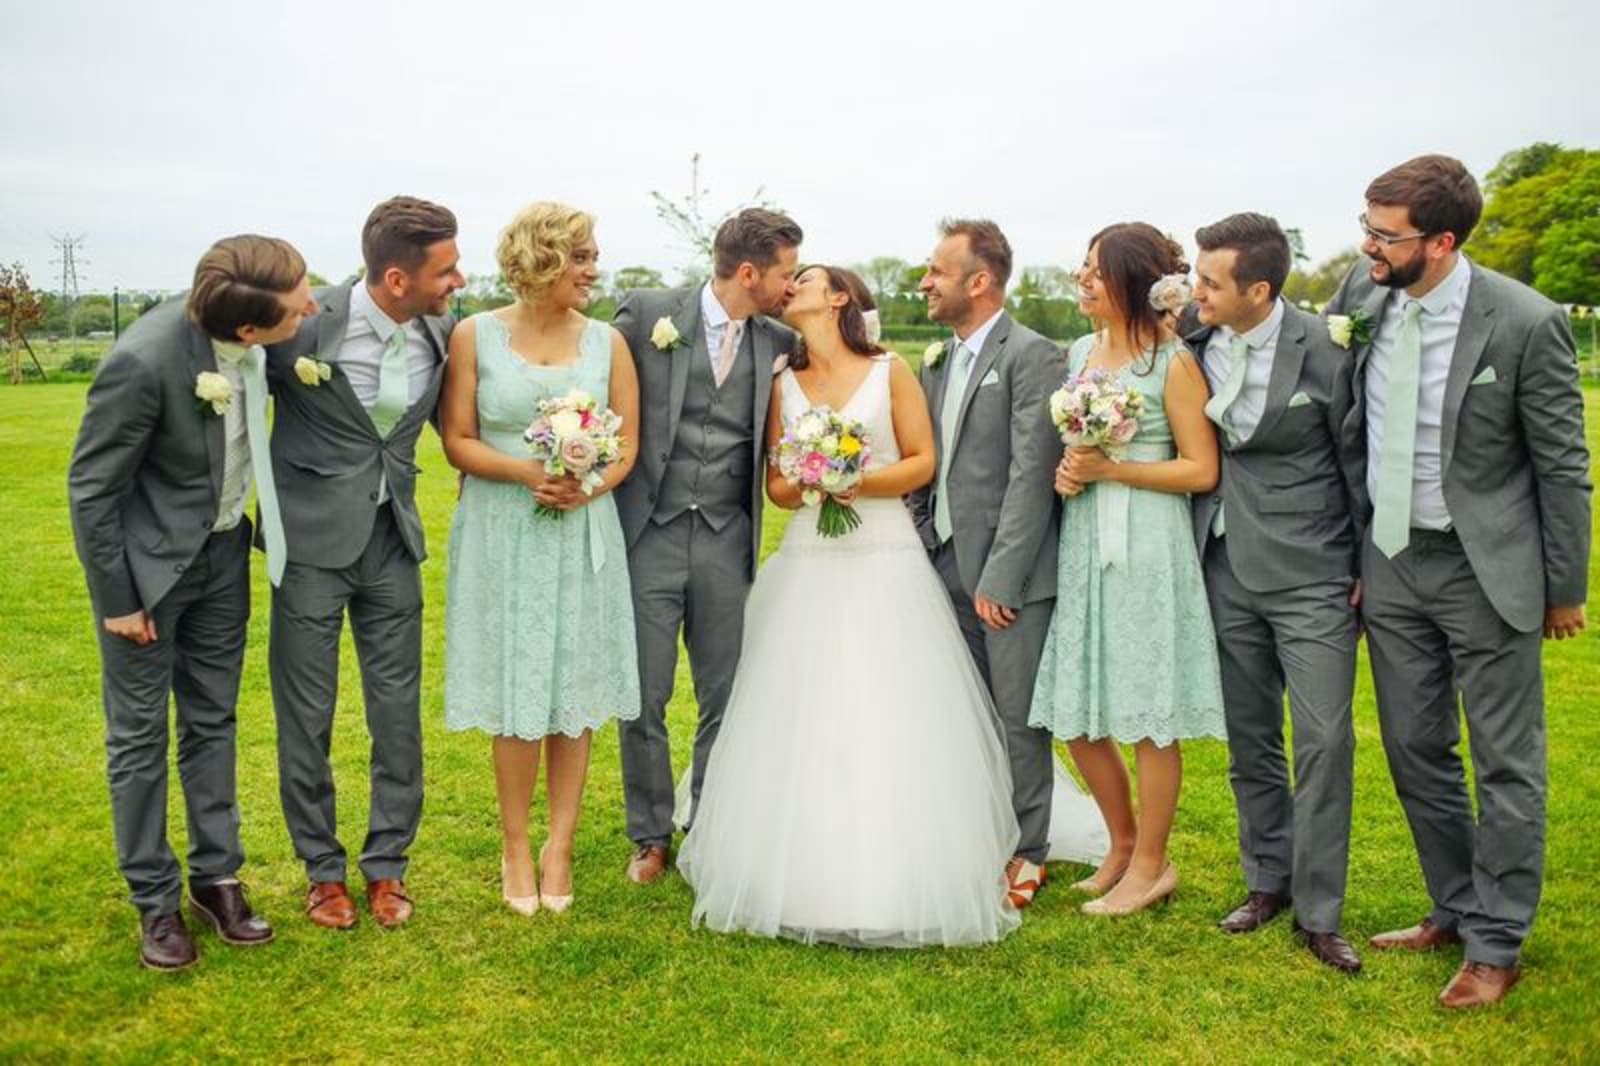 Summer | Country | Outdoor | Green | Pink | Marquee | Real Wedding | Hajley Photography #Bridebook #RealWedding #WeddingIdeas Bridebook.co.uk 